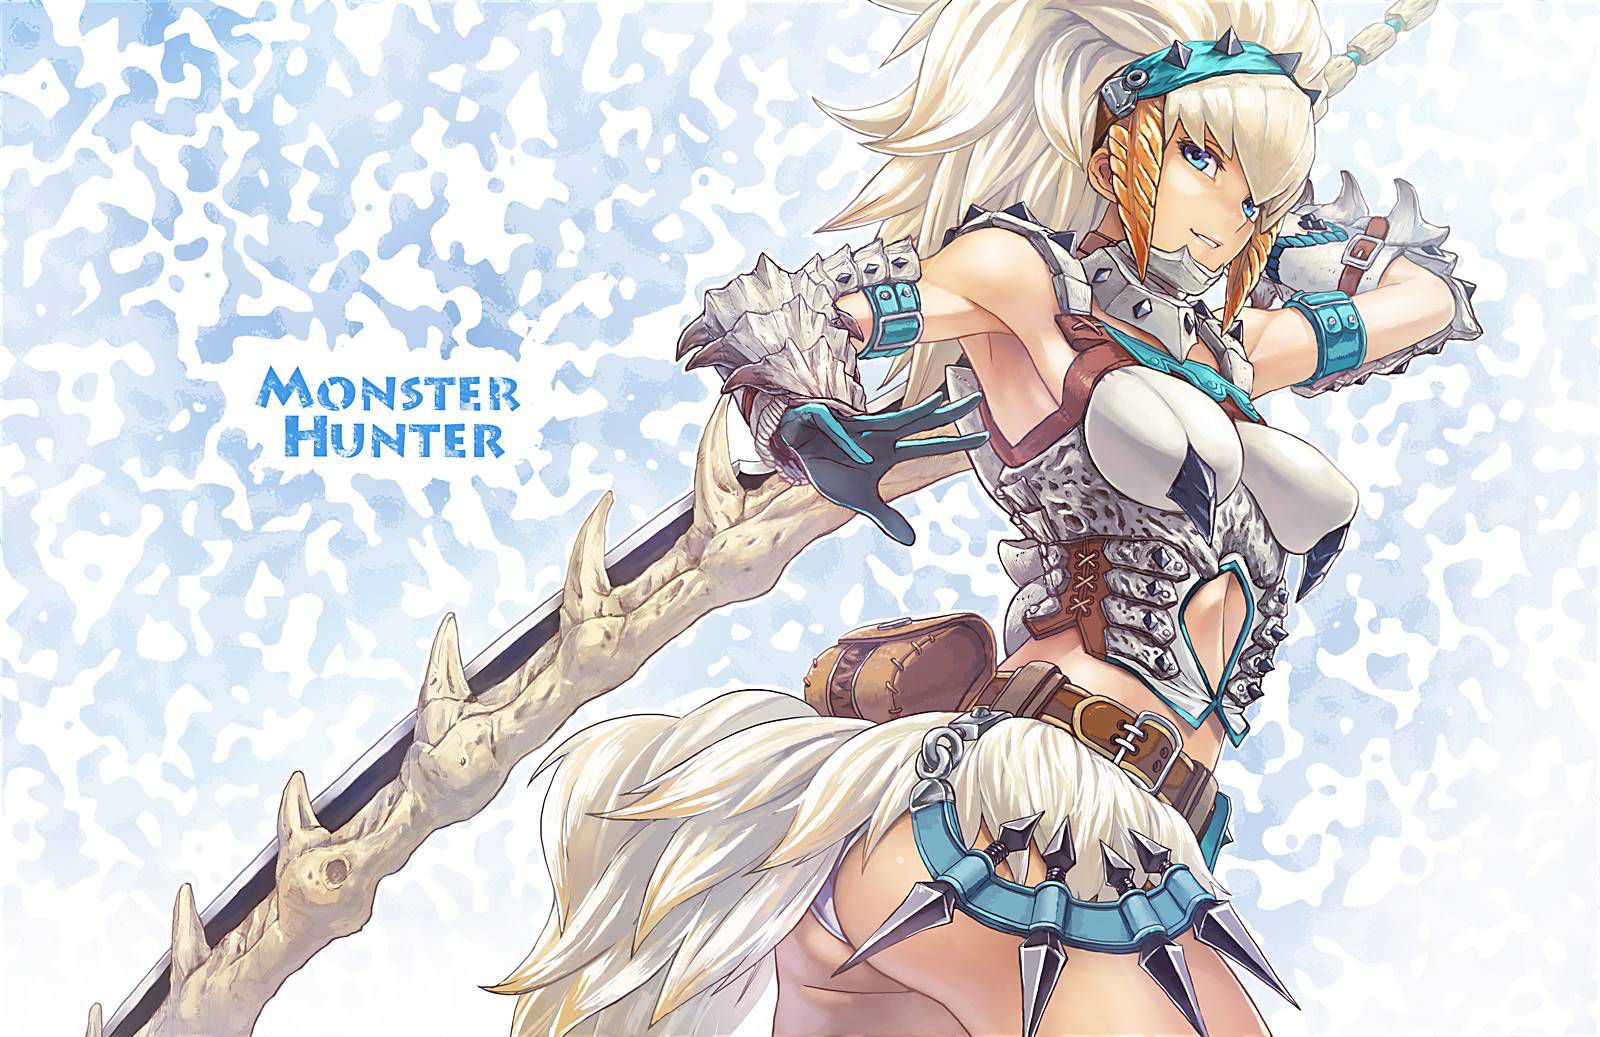 Erotic image roundup of Monster Hunter! 34